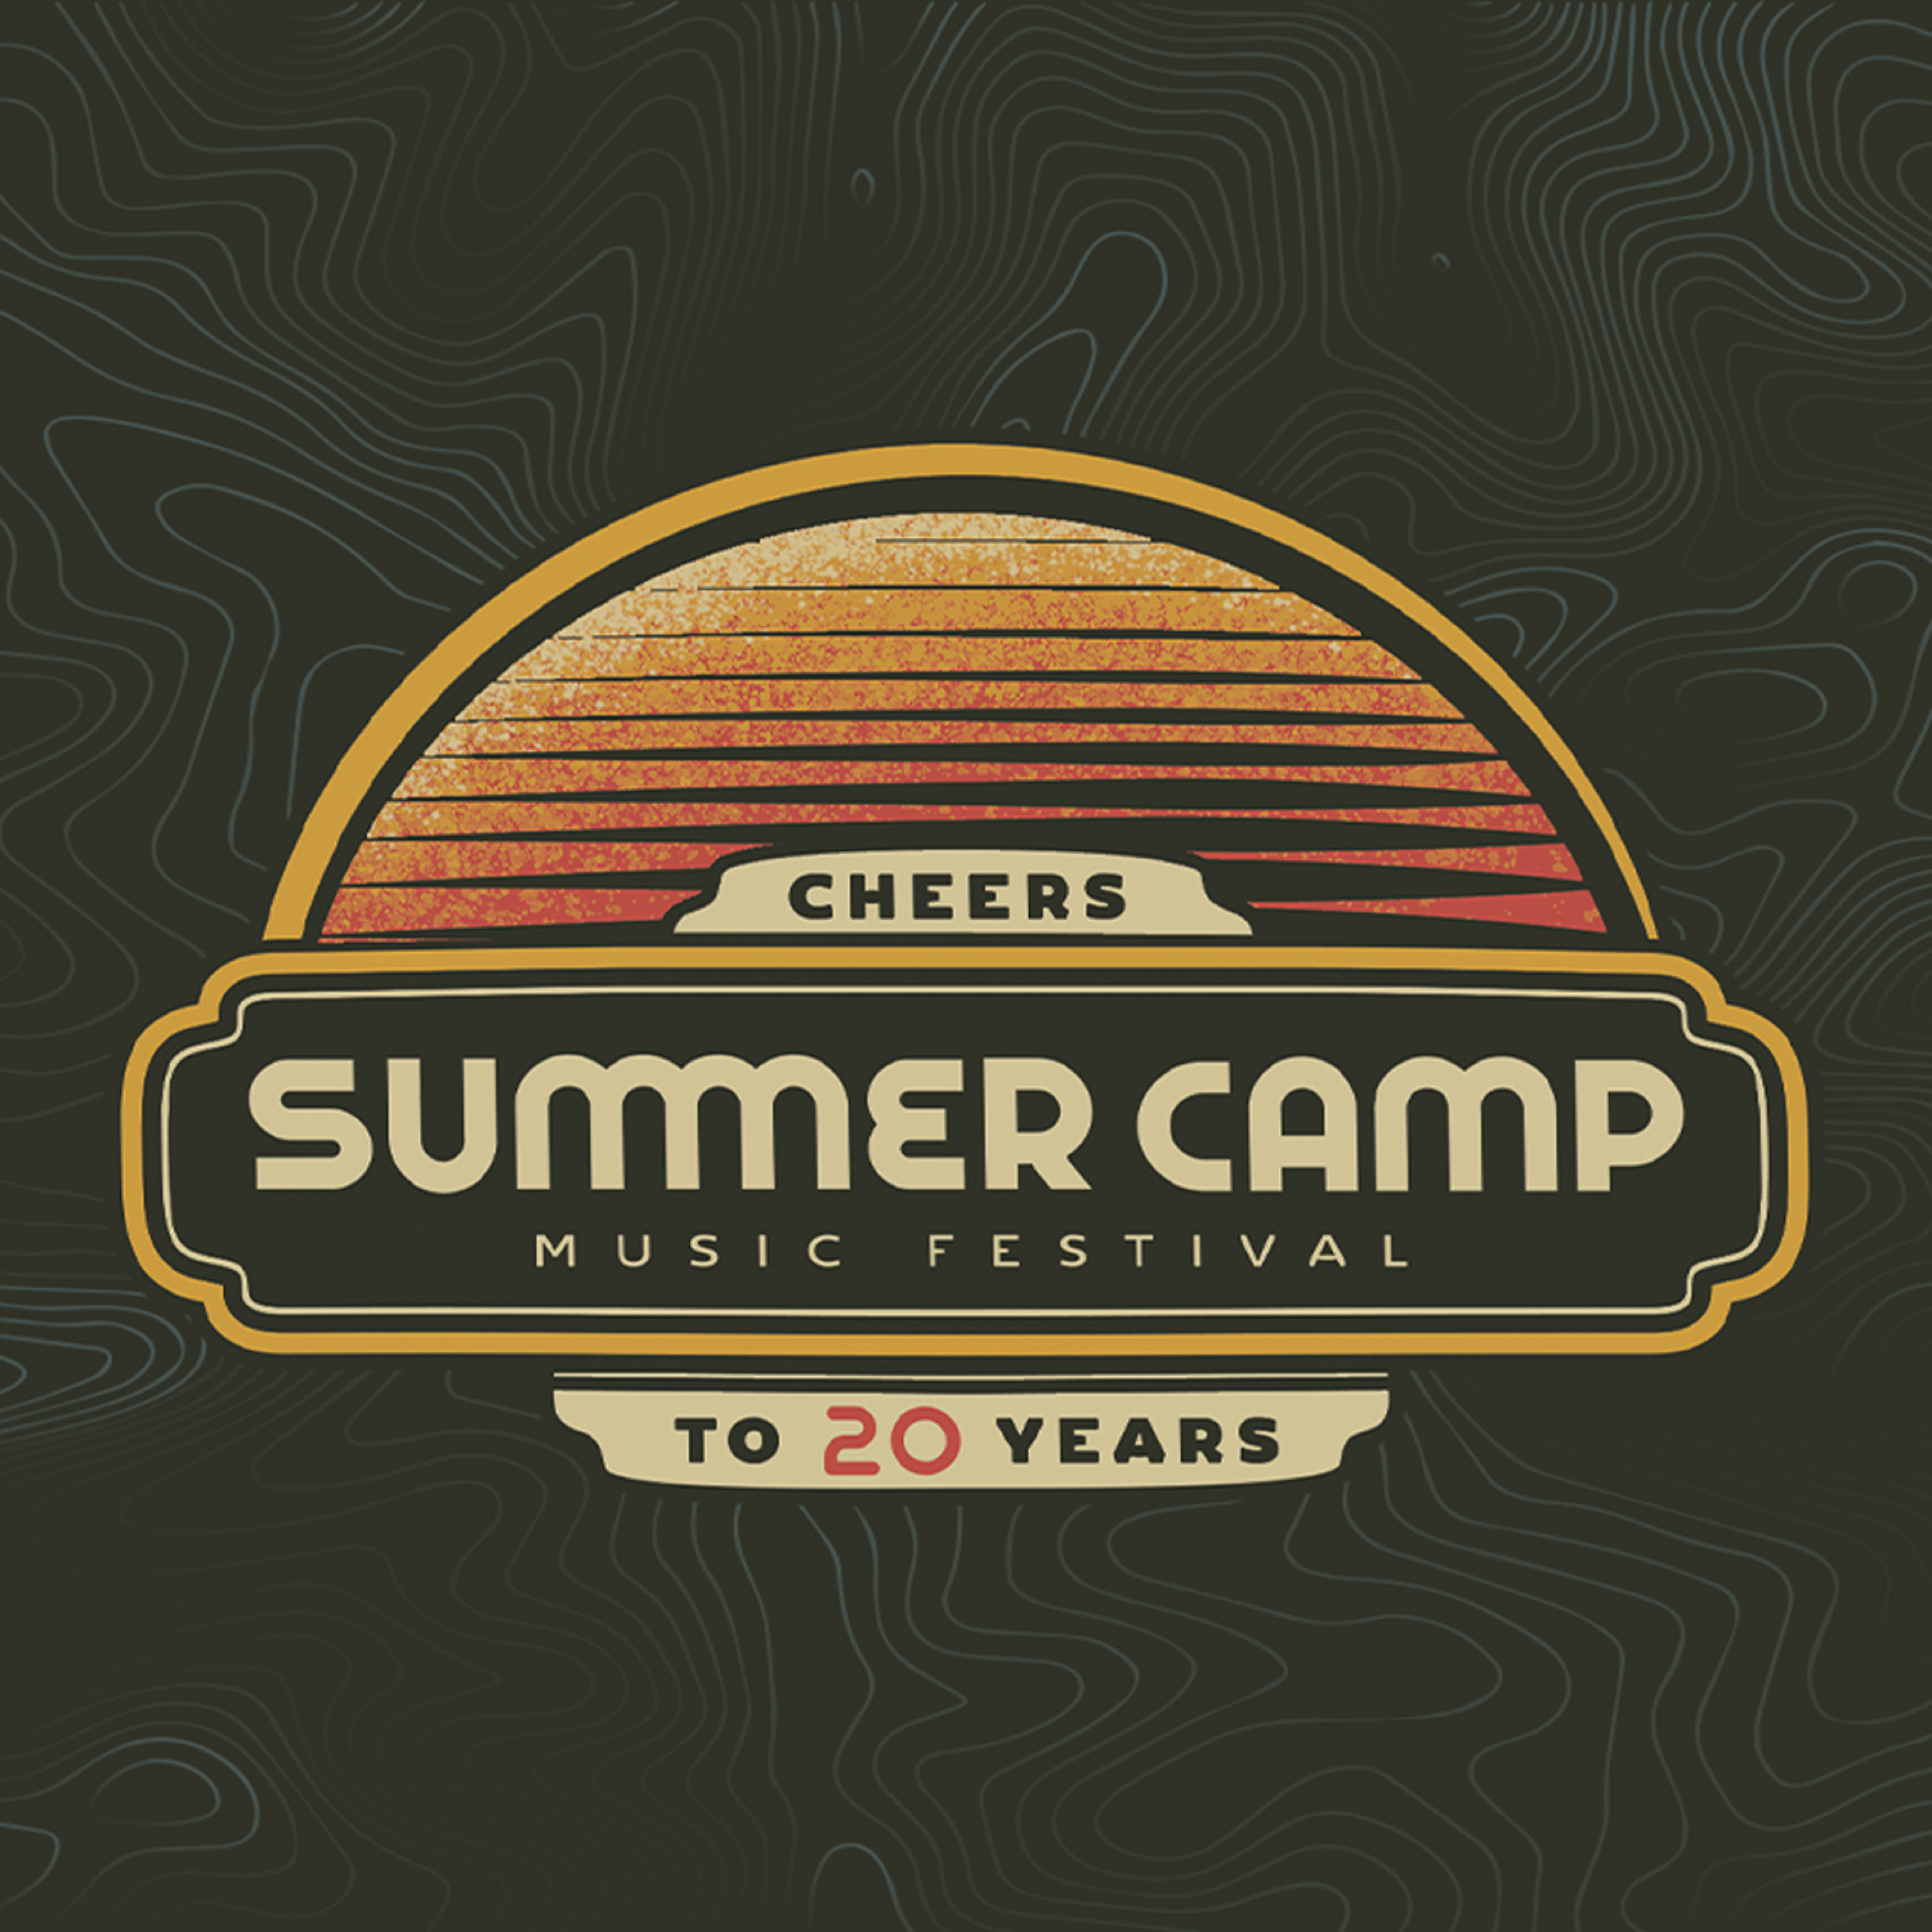 Summer Camp Music Festival Postponed until August